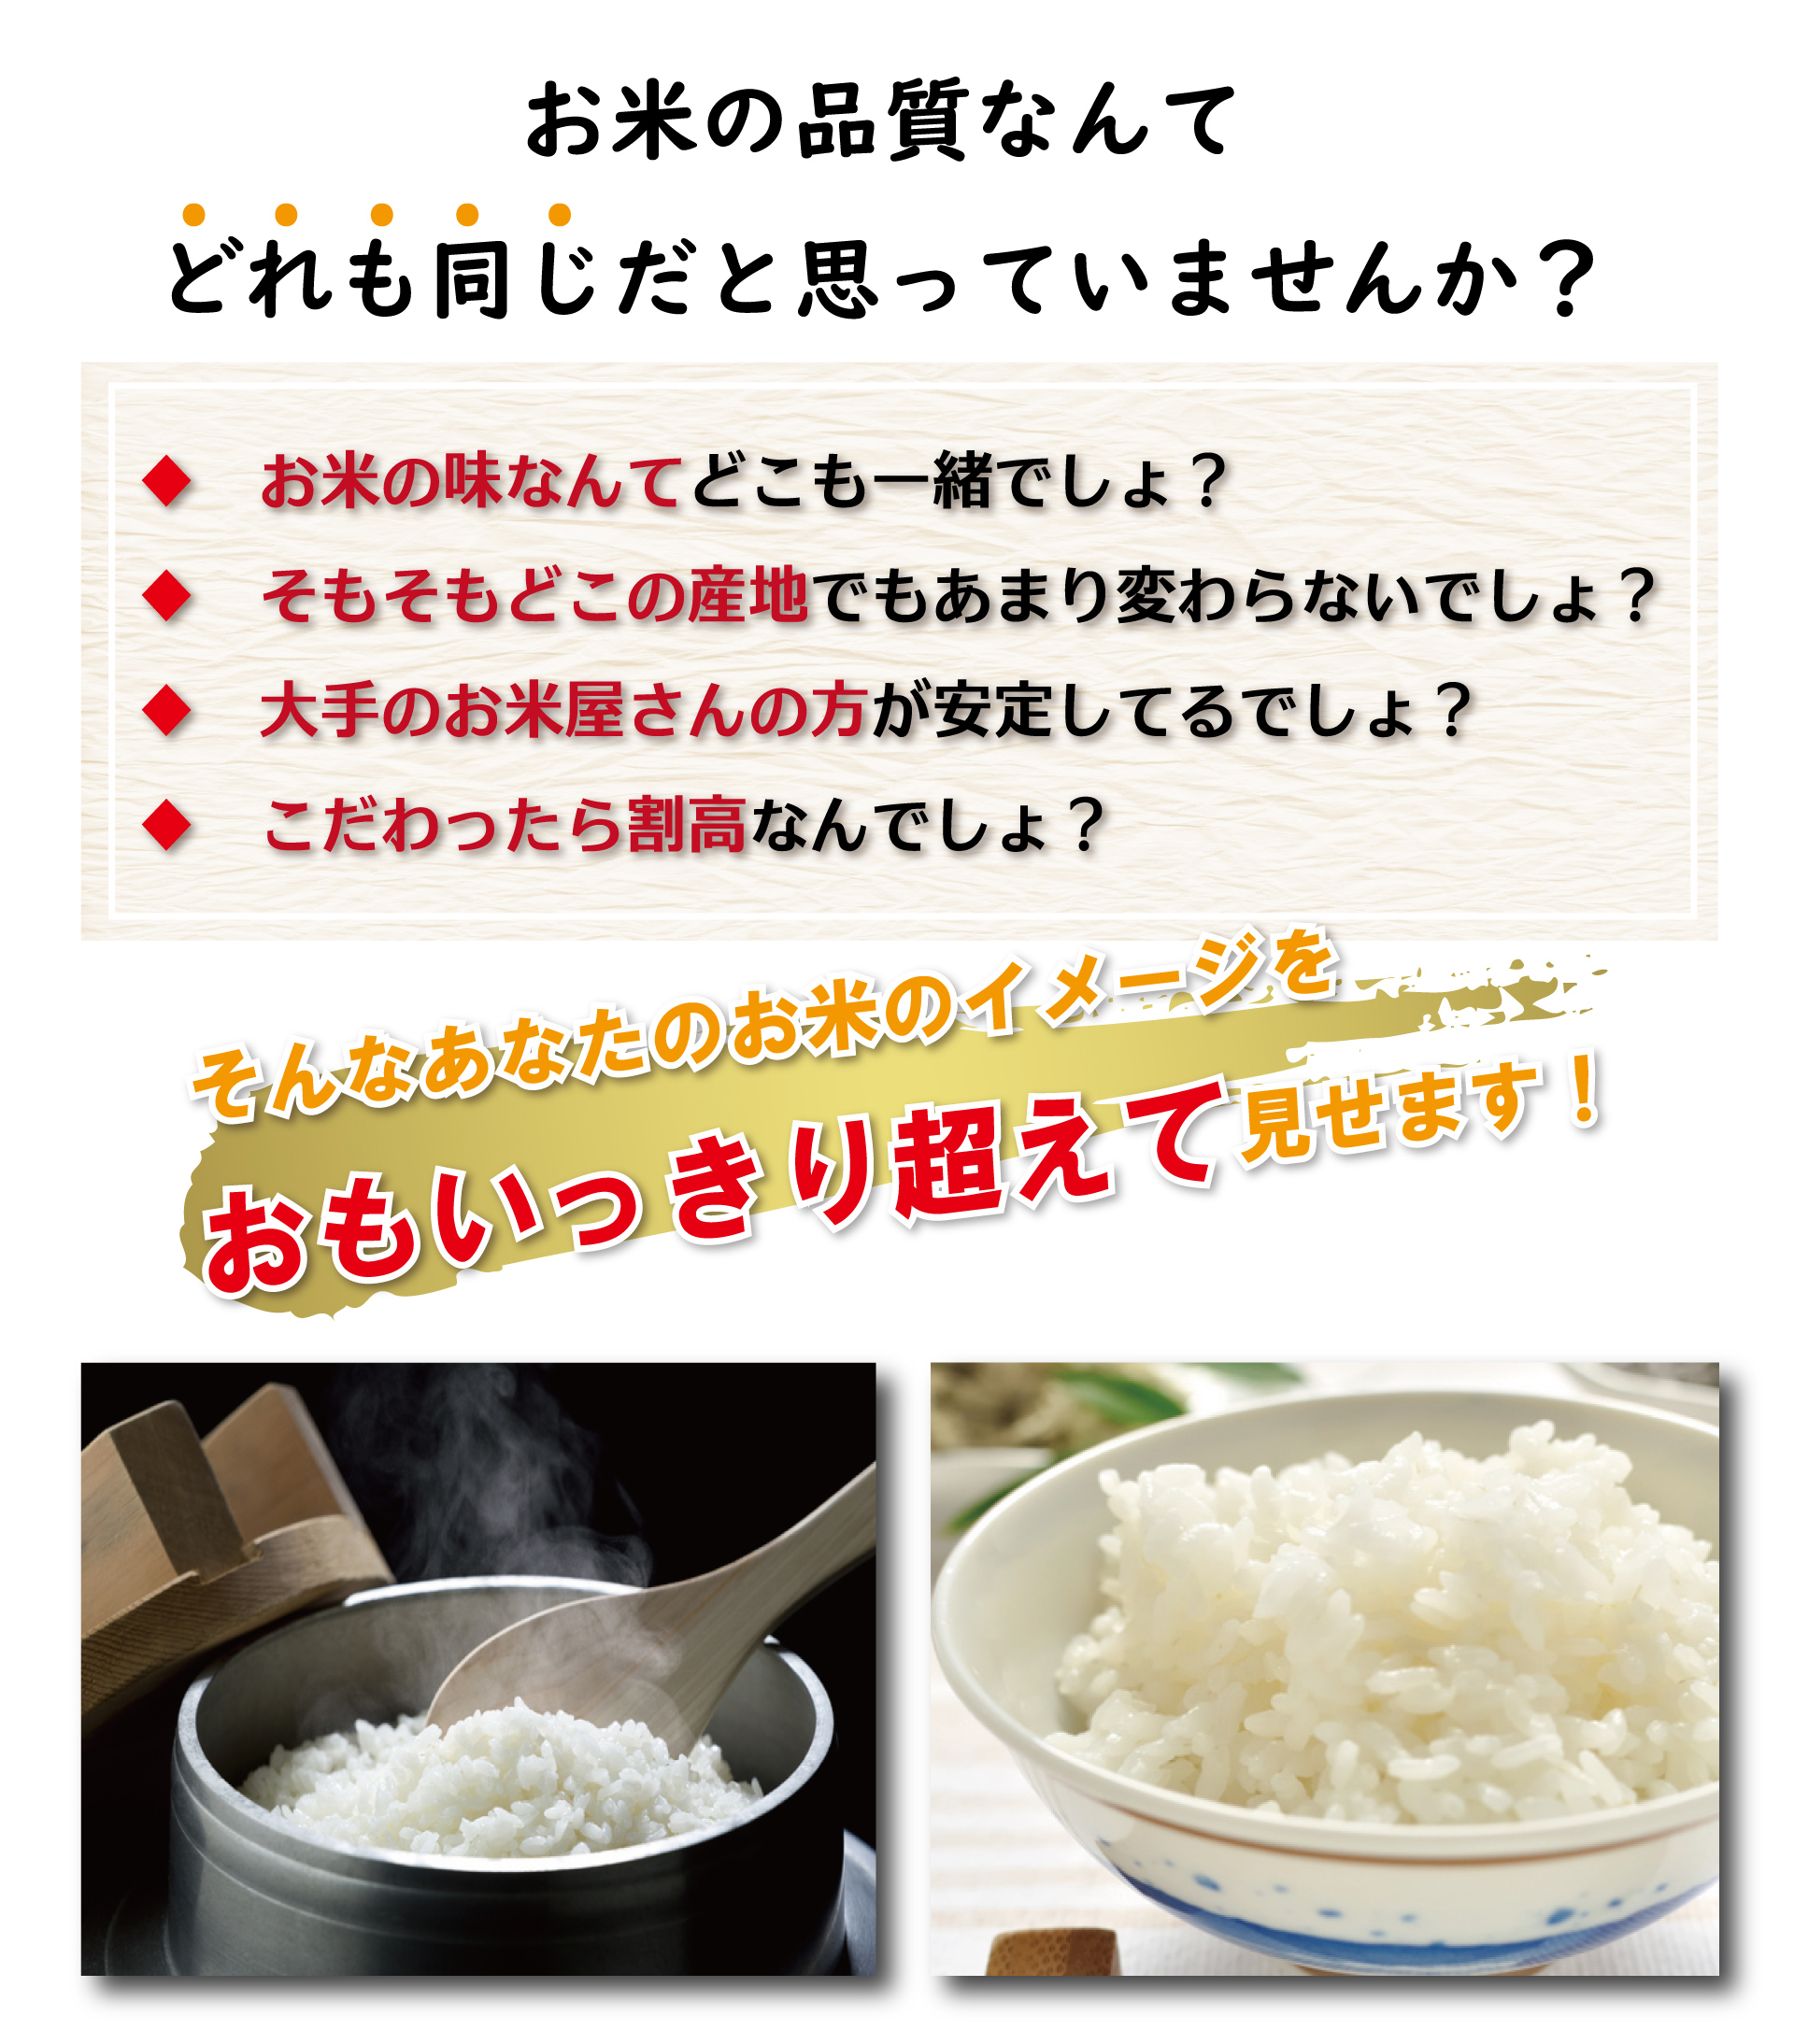 kitora_rice_lp03.jpg